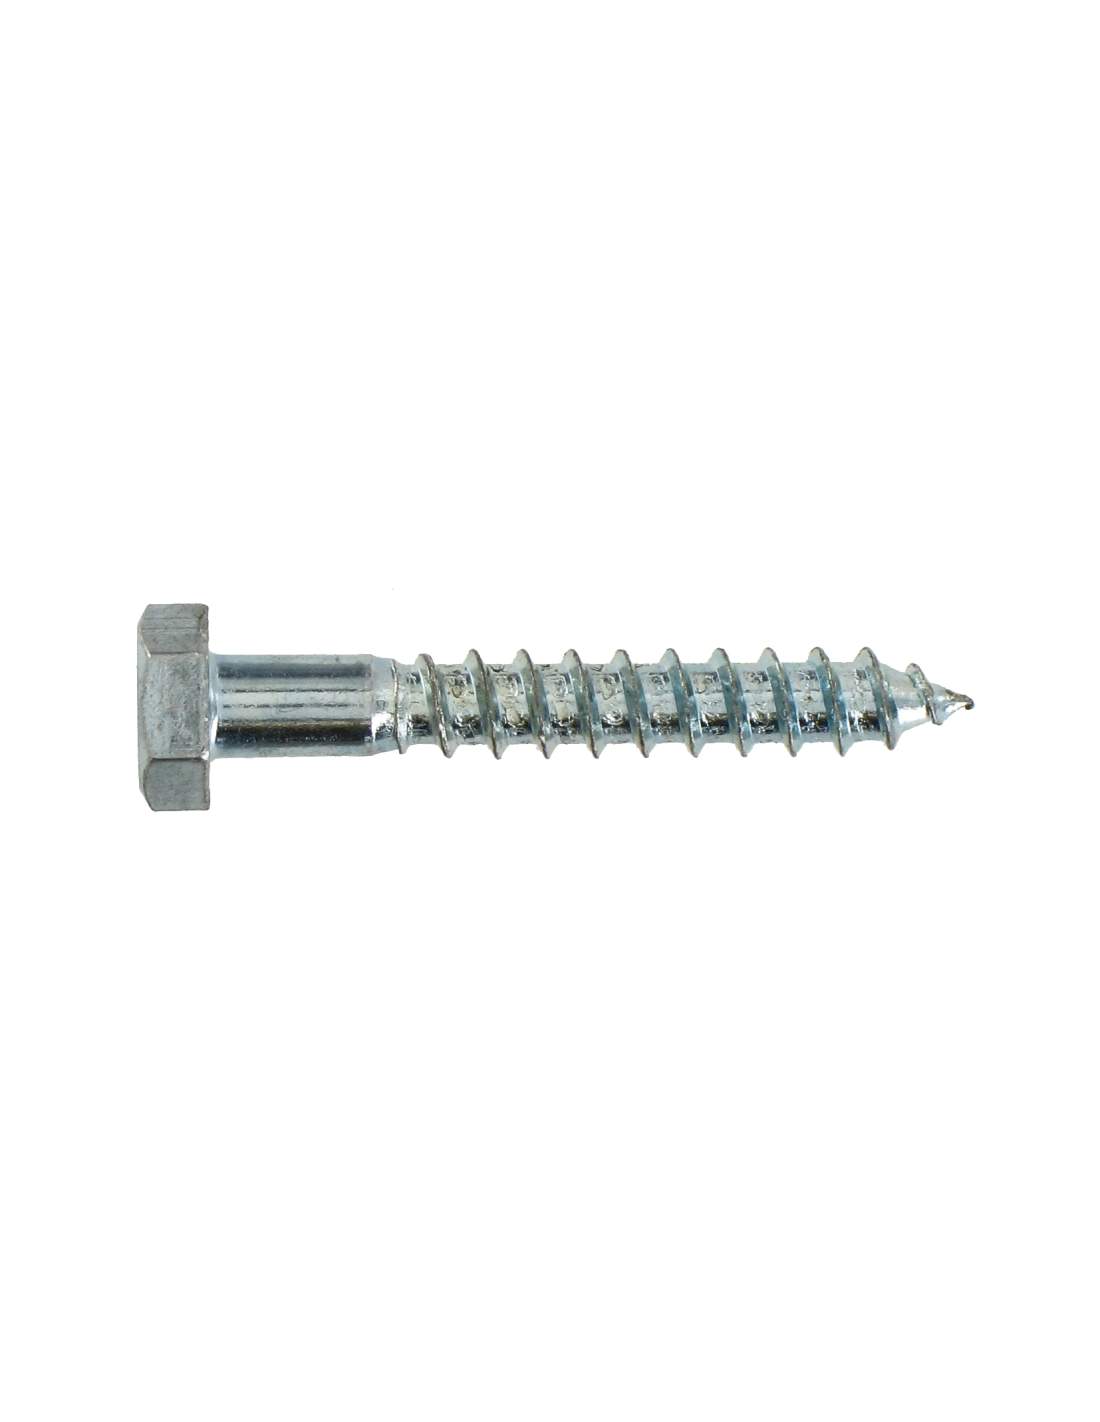 Zinc-plated steel lag bolt 8x120, 3 pieces.